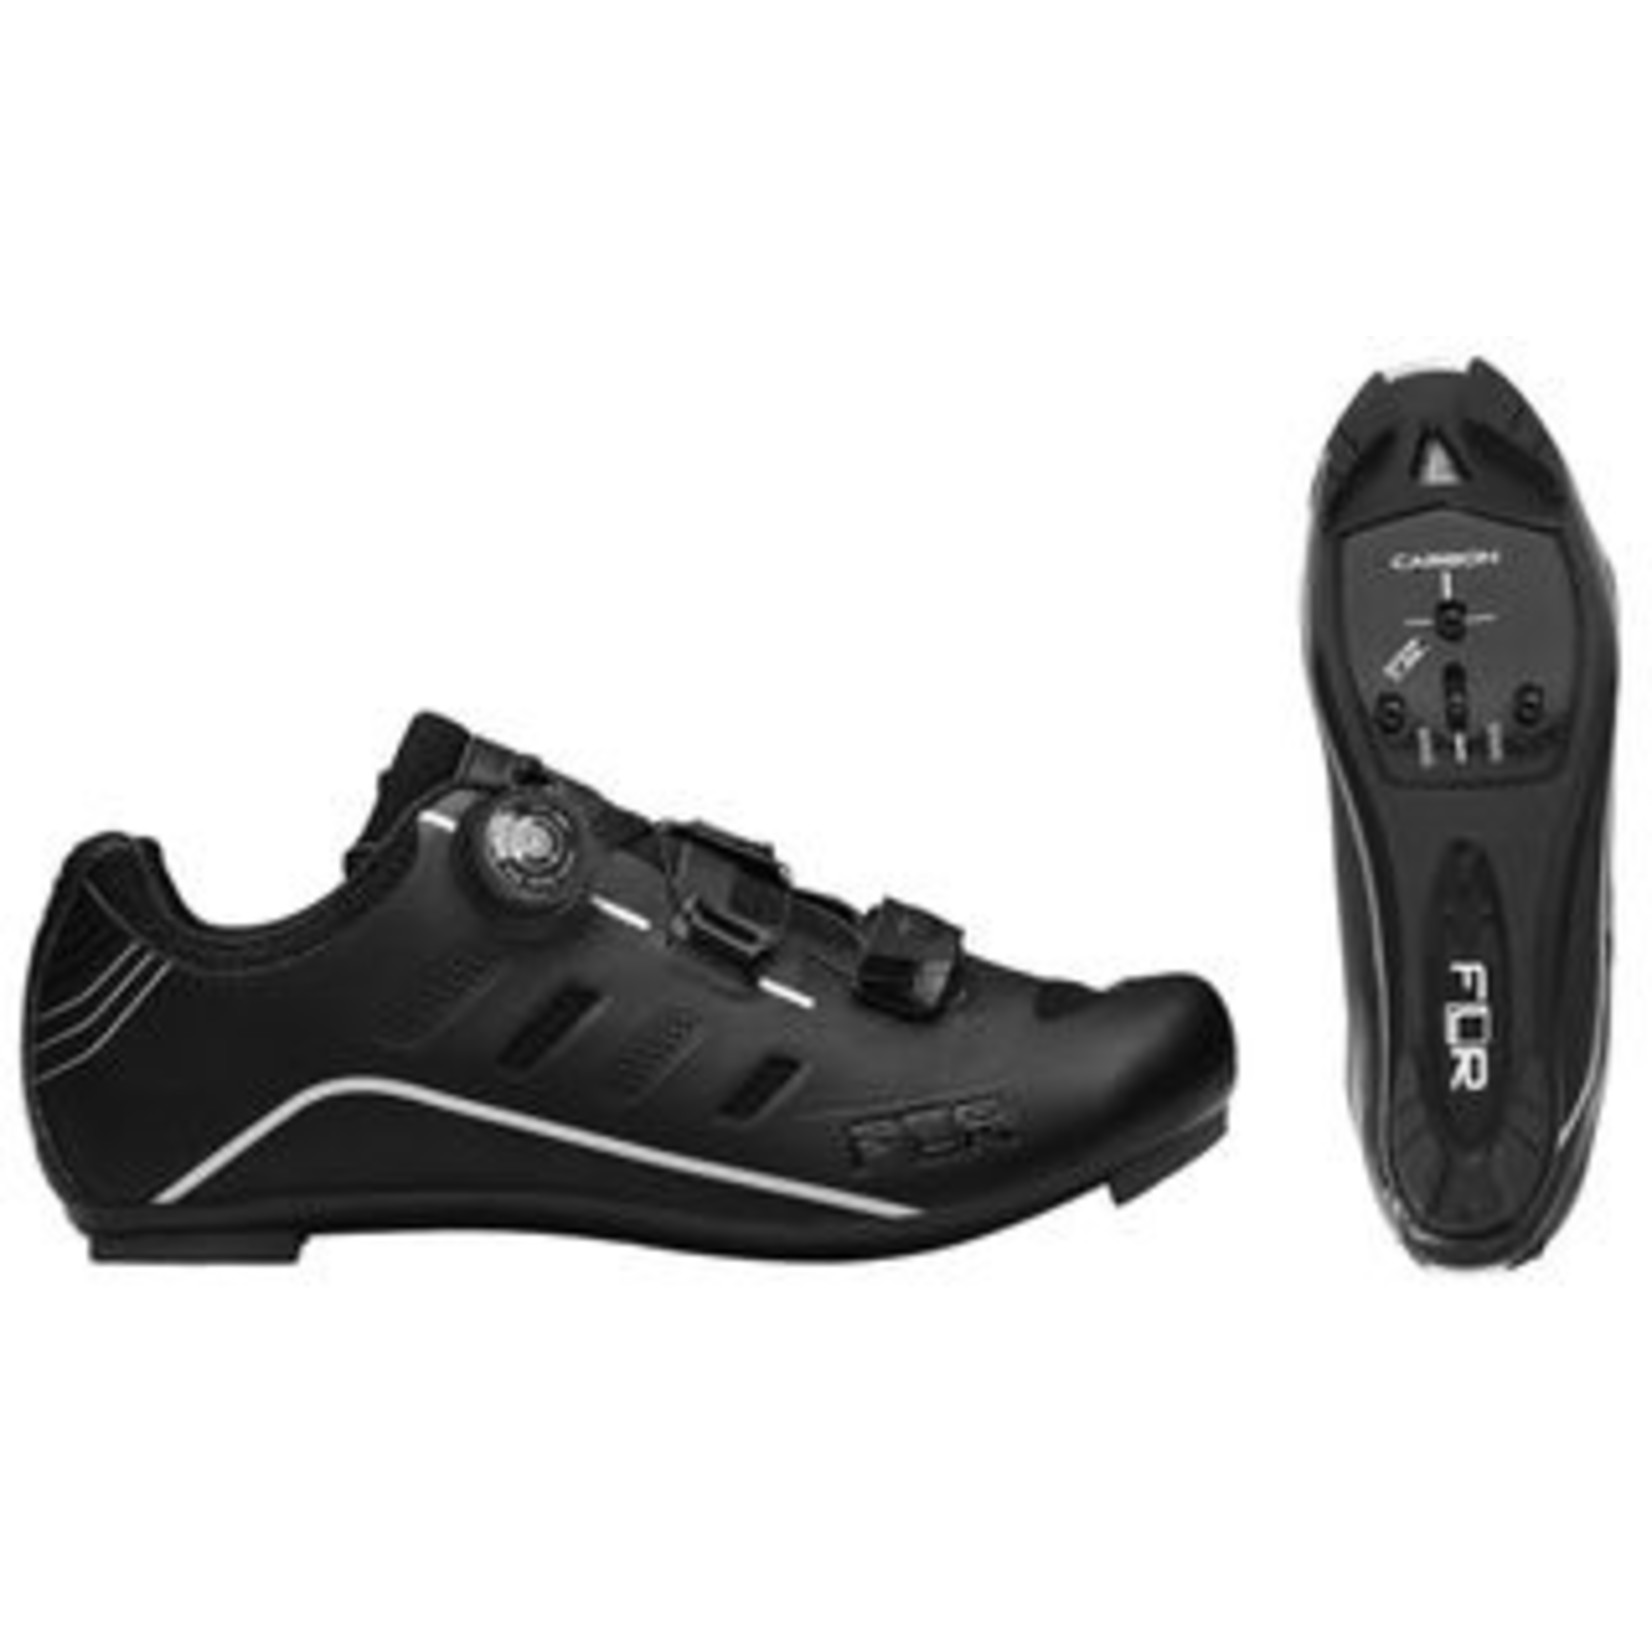 FLR FLR F-22-II - Pro Road Shoes - R350 Carbon Plate - Single Dial - Size 39 - Black